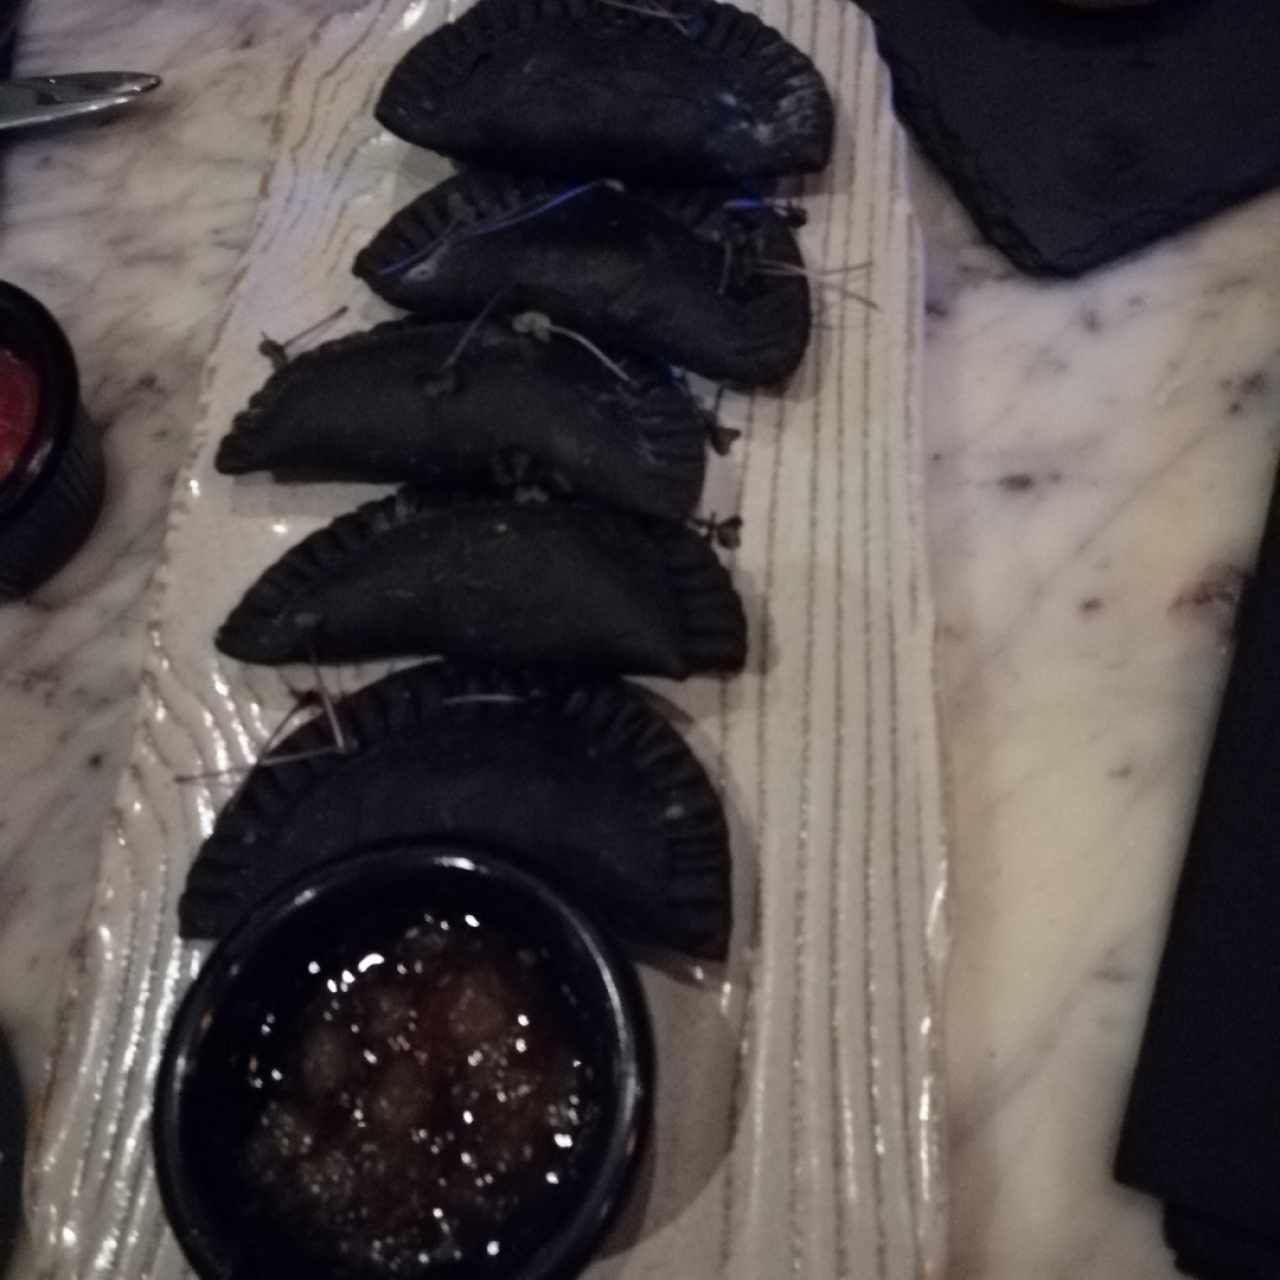 SMALL PLATES - Black Empanadas